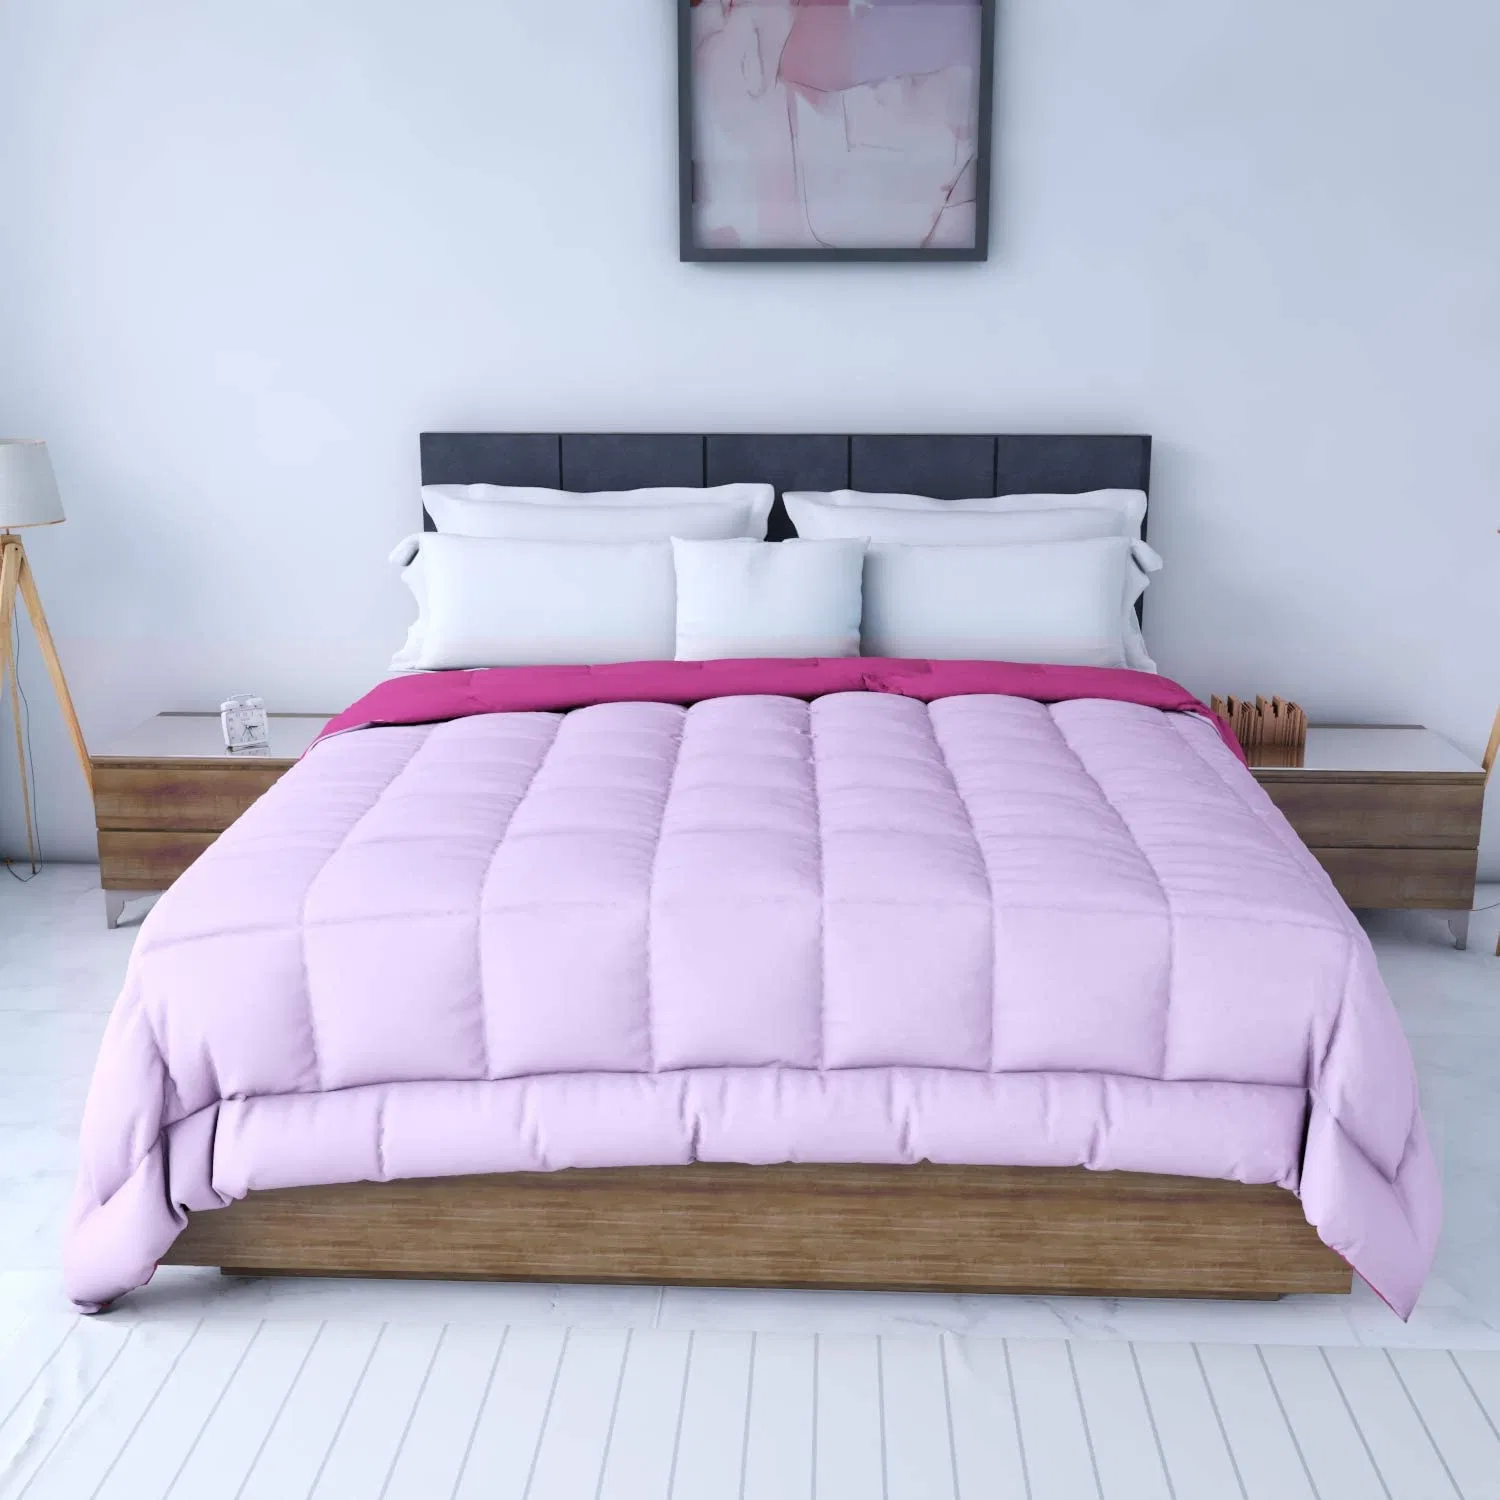 China Supplier Manufacturer Wholesale/Supplier Quality Bedding Bicolour Luxury Sets Microfiber Comforter